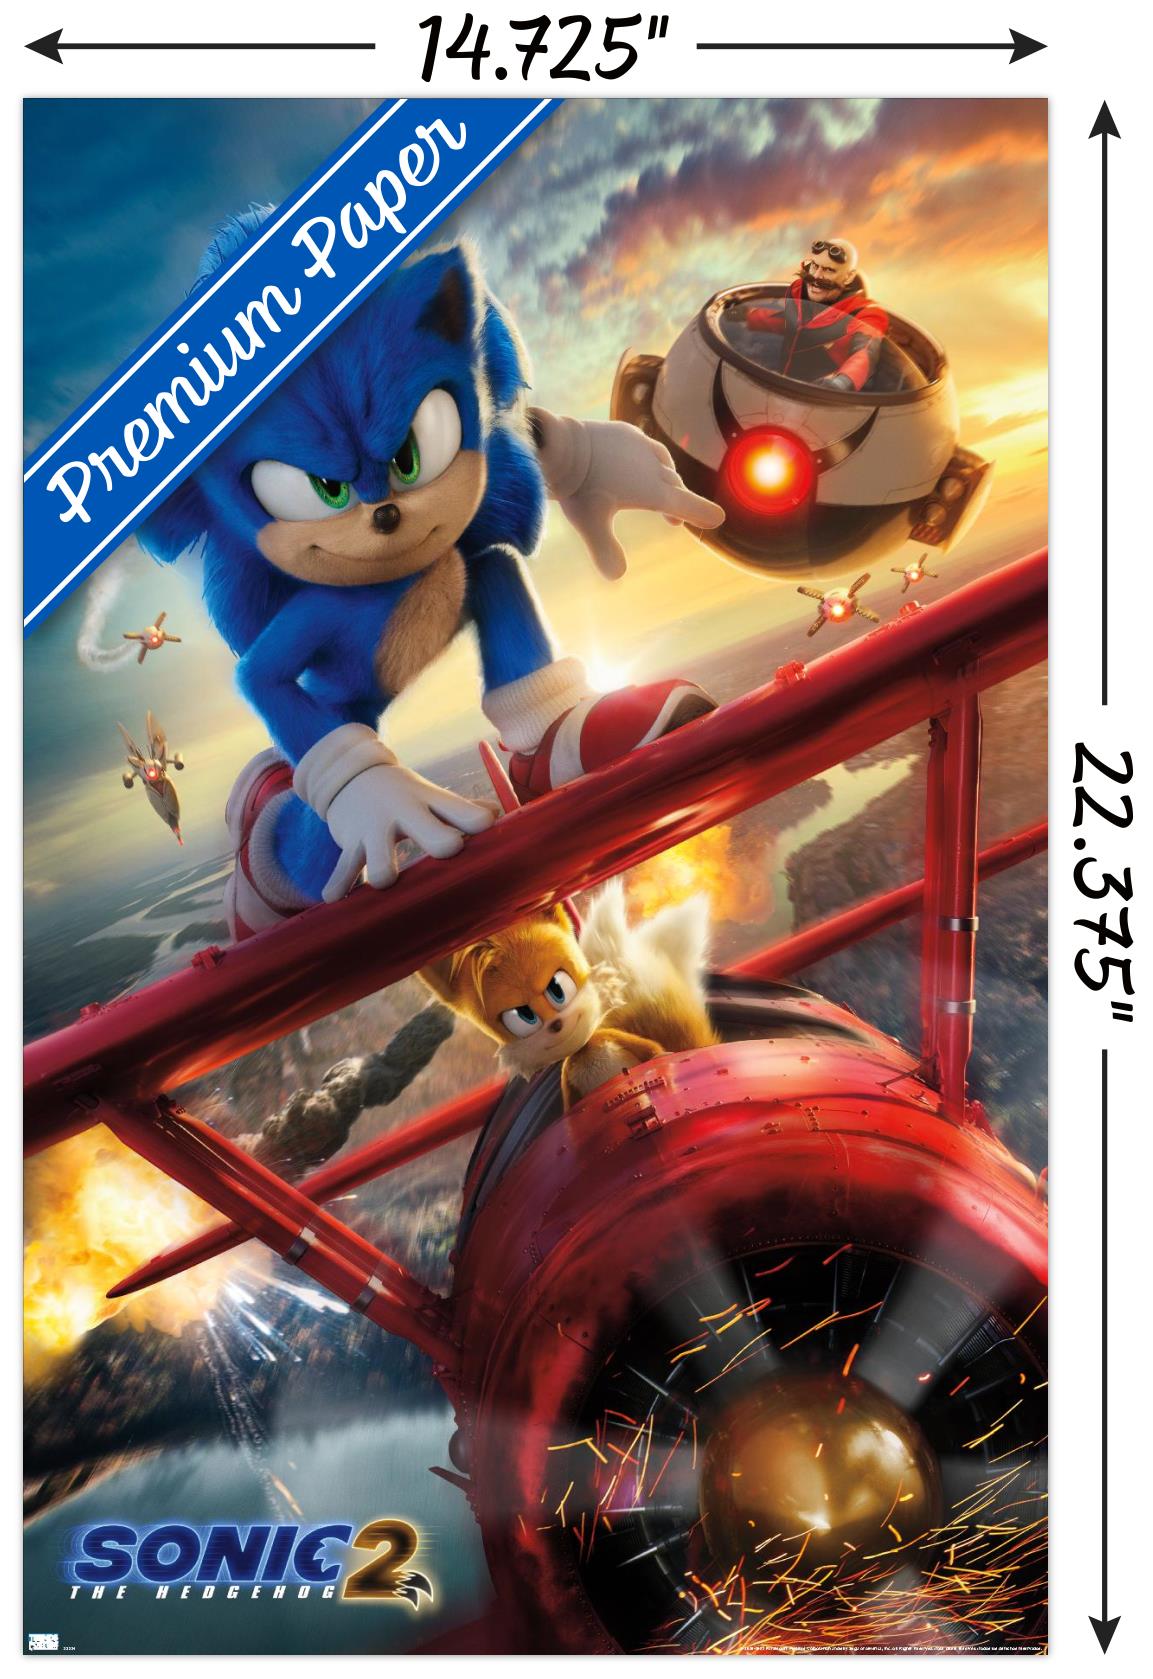 Sonic the Hedgehog 2 - Key Art Wall Poster, 14.725 x 22.375 